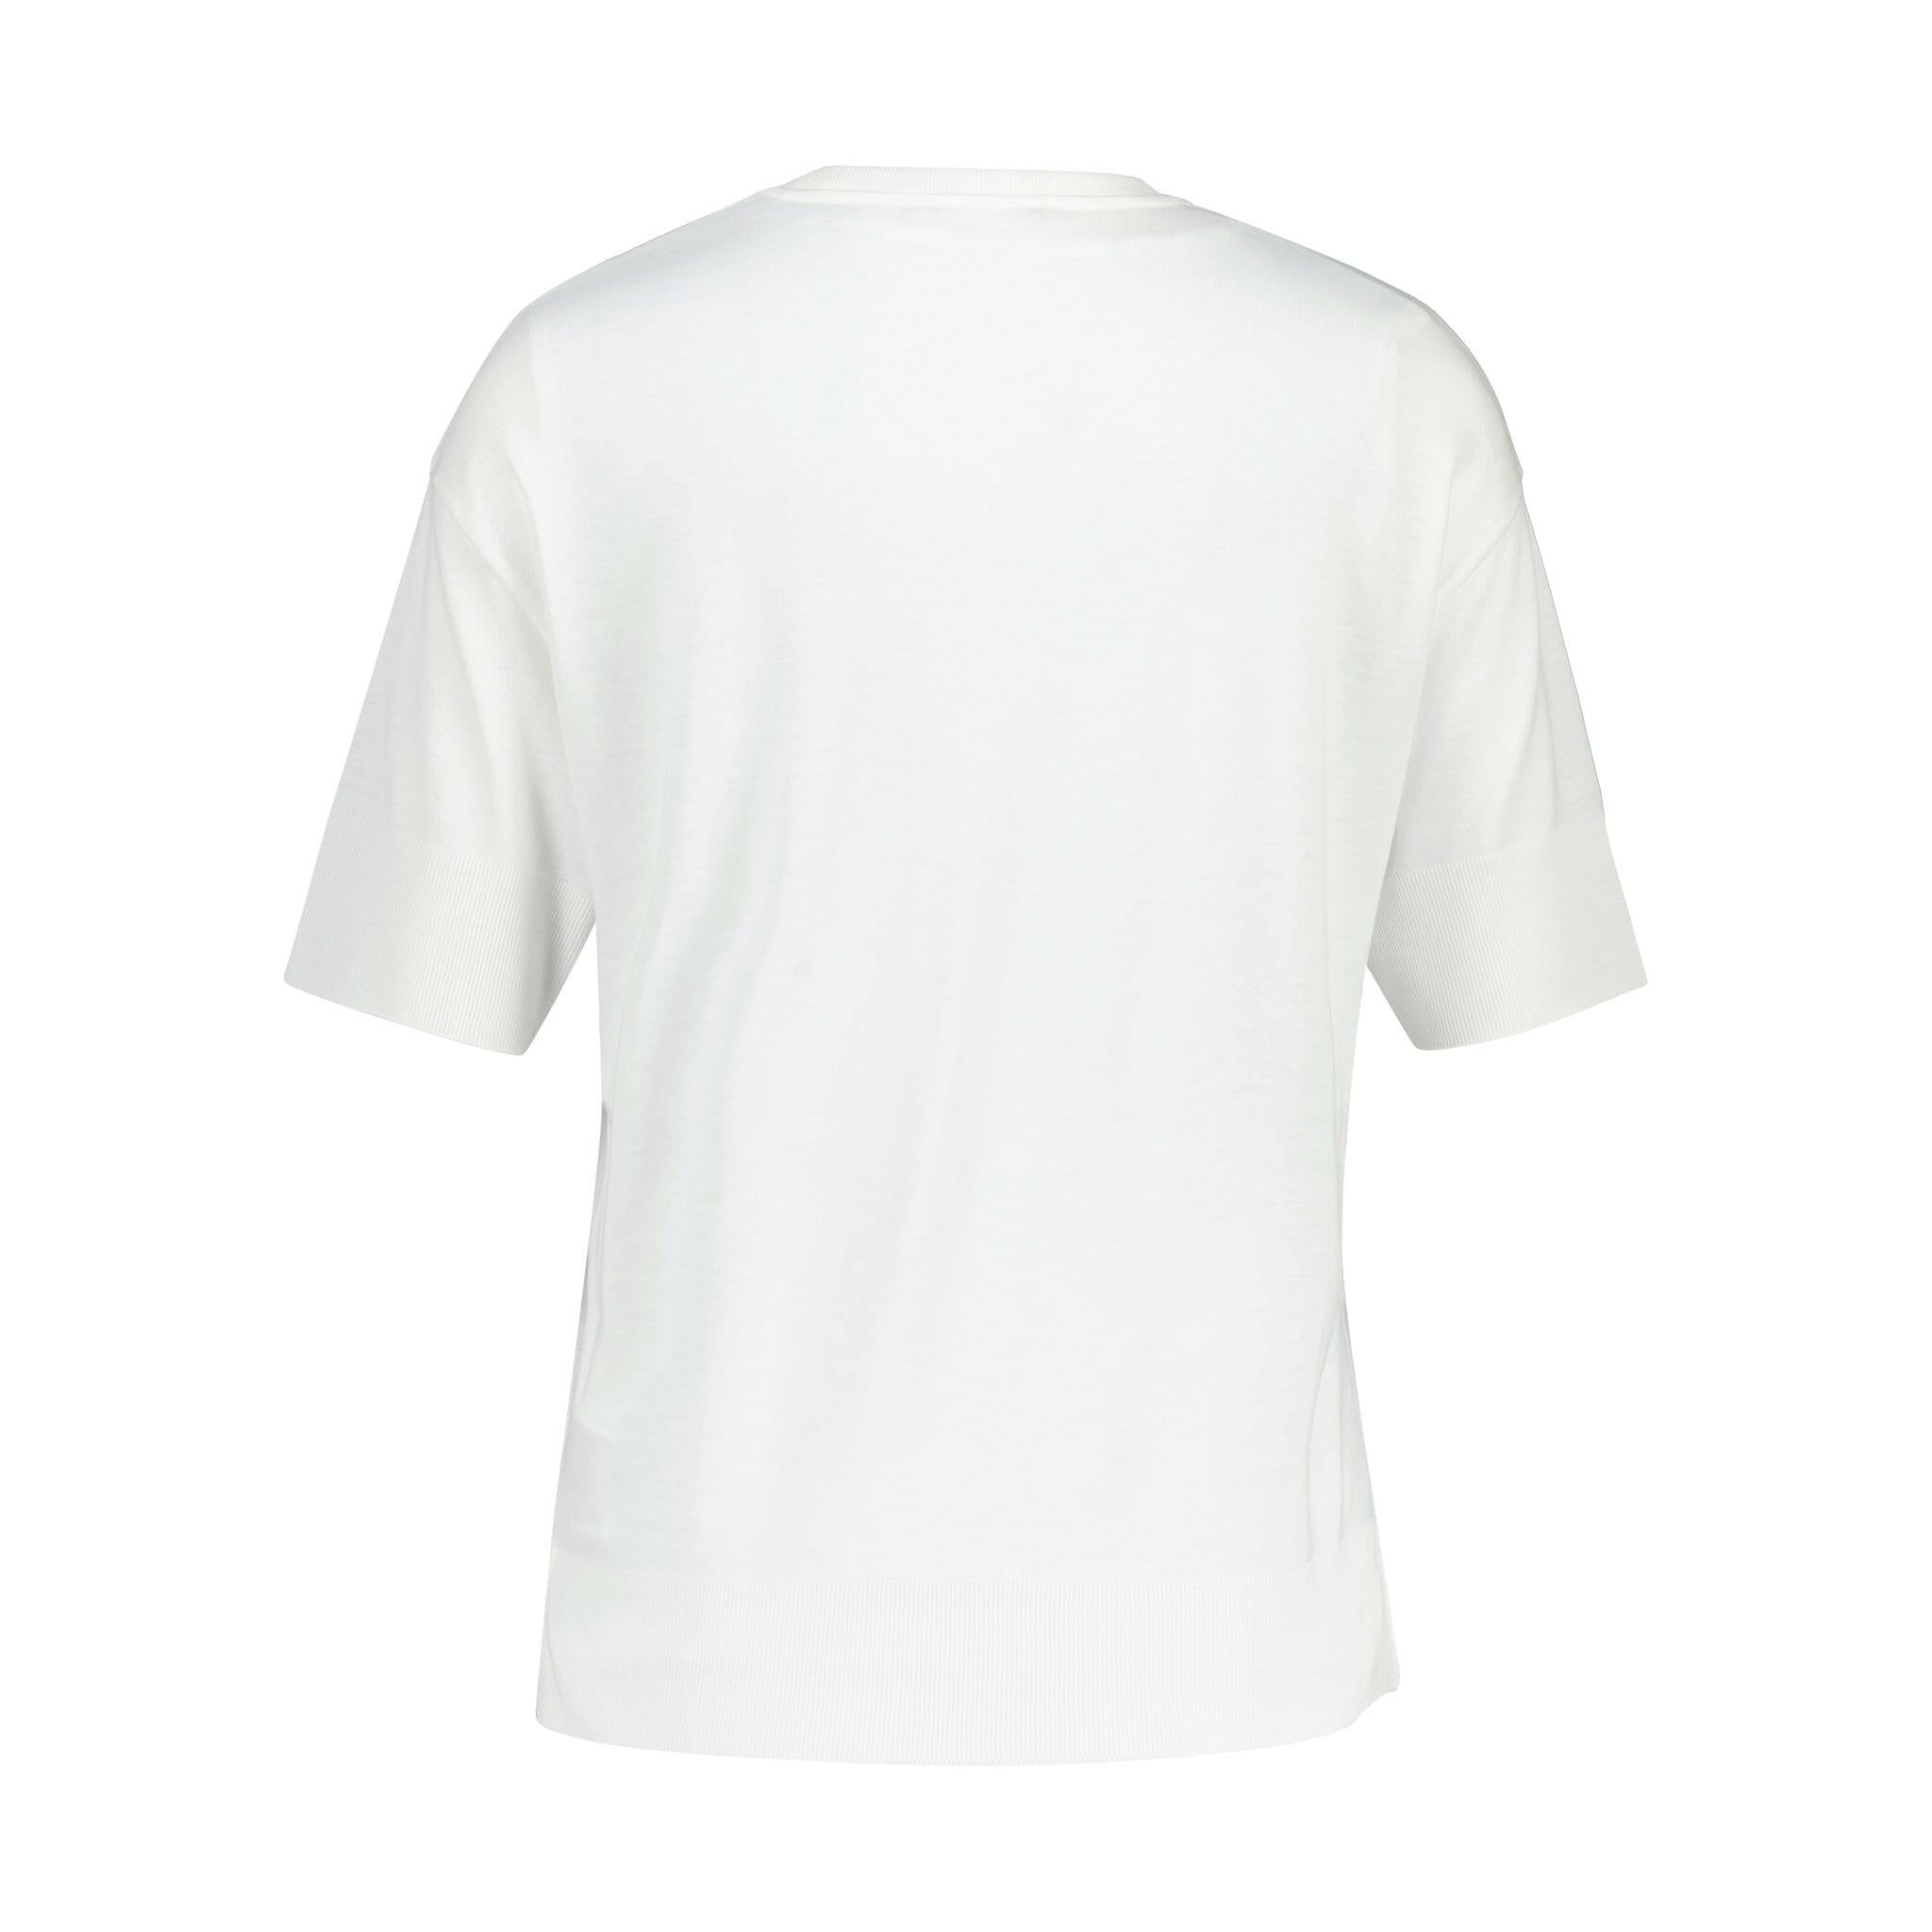 T-Shirt in transparenter Optik